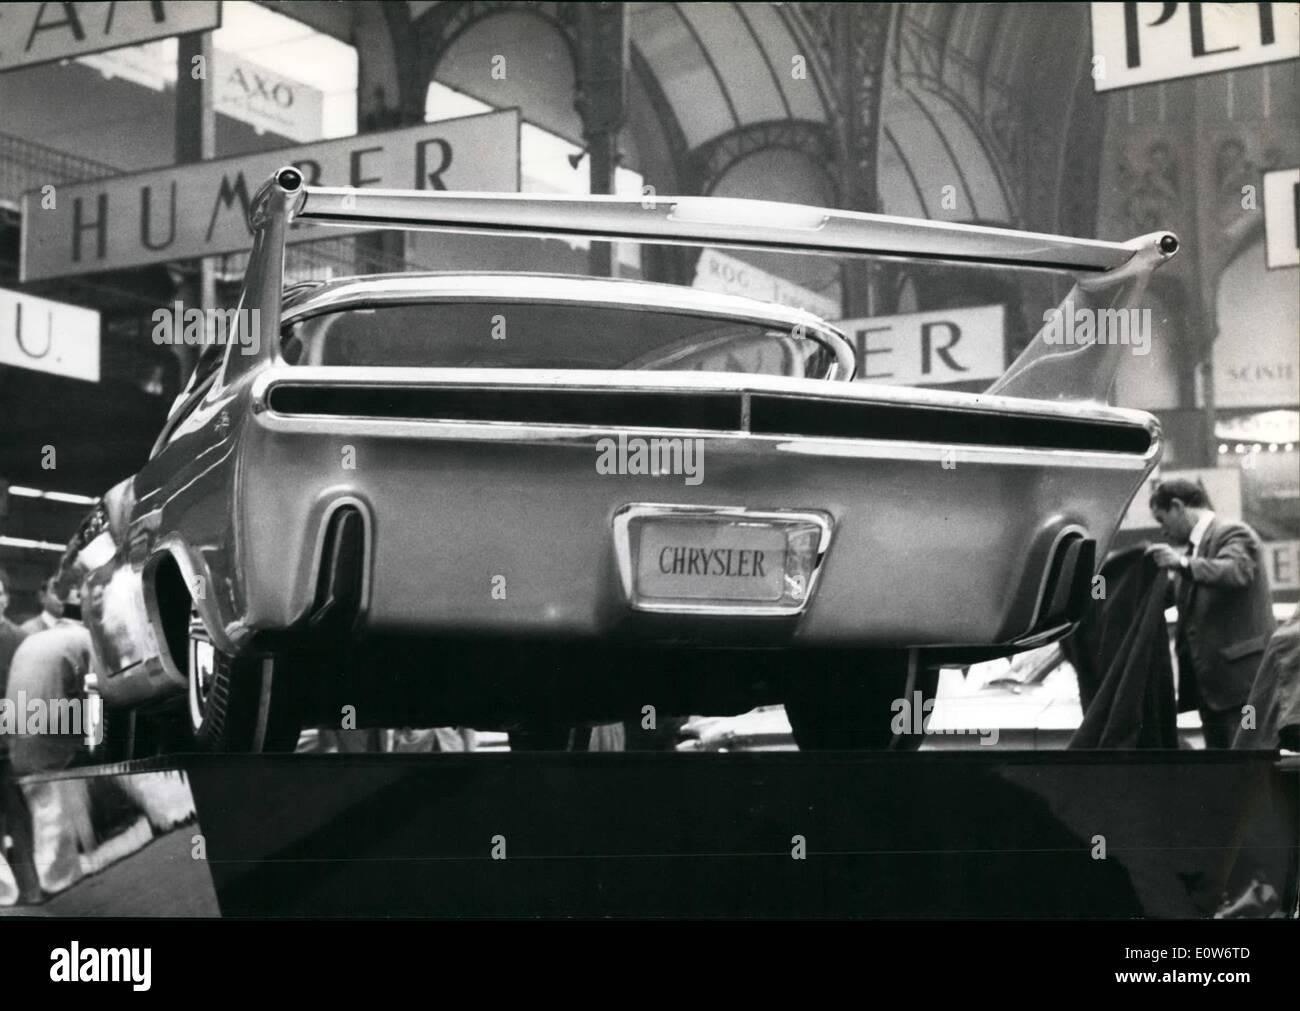 Oct. 10, 1961 - $ 250,000 Car shown at Paris Motor show: A 50,000 experimental chrysler seen at the Paris motor show opening tomorrow. Stock Photo